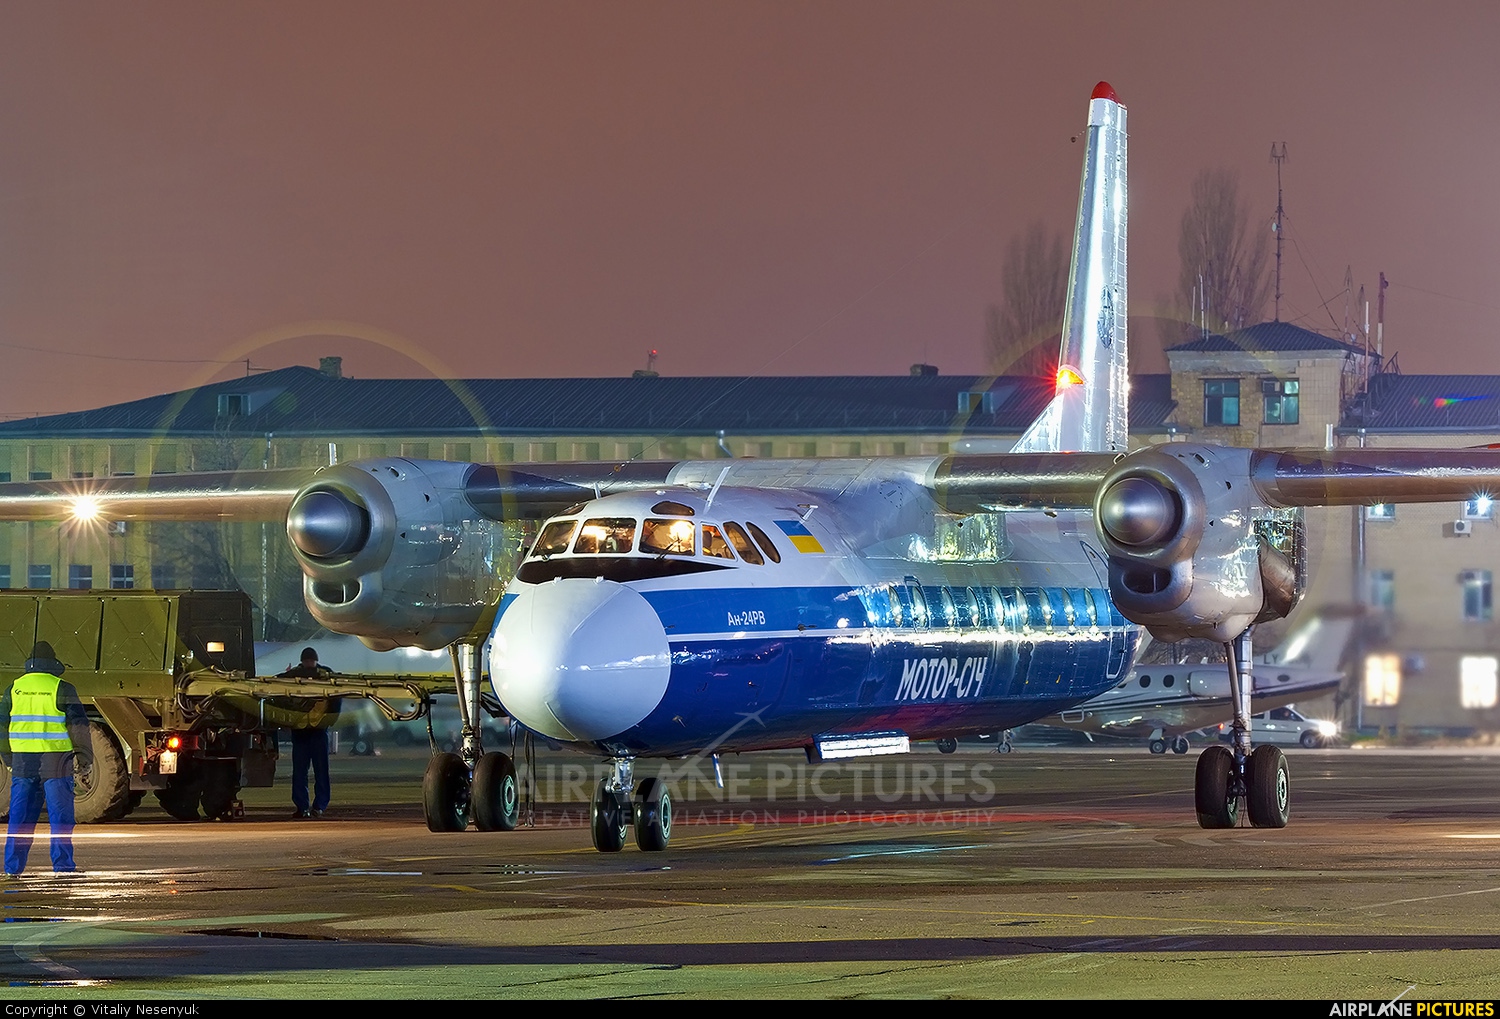 Motor Sich UR-MSI aircraft at Kyiv - Zhulyany